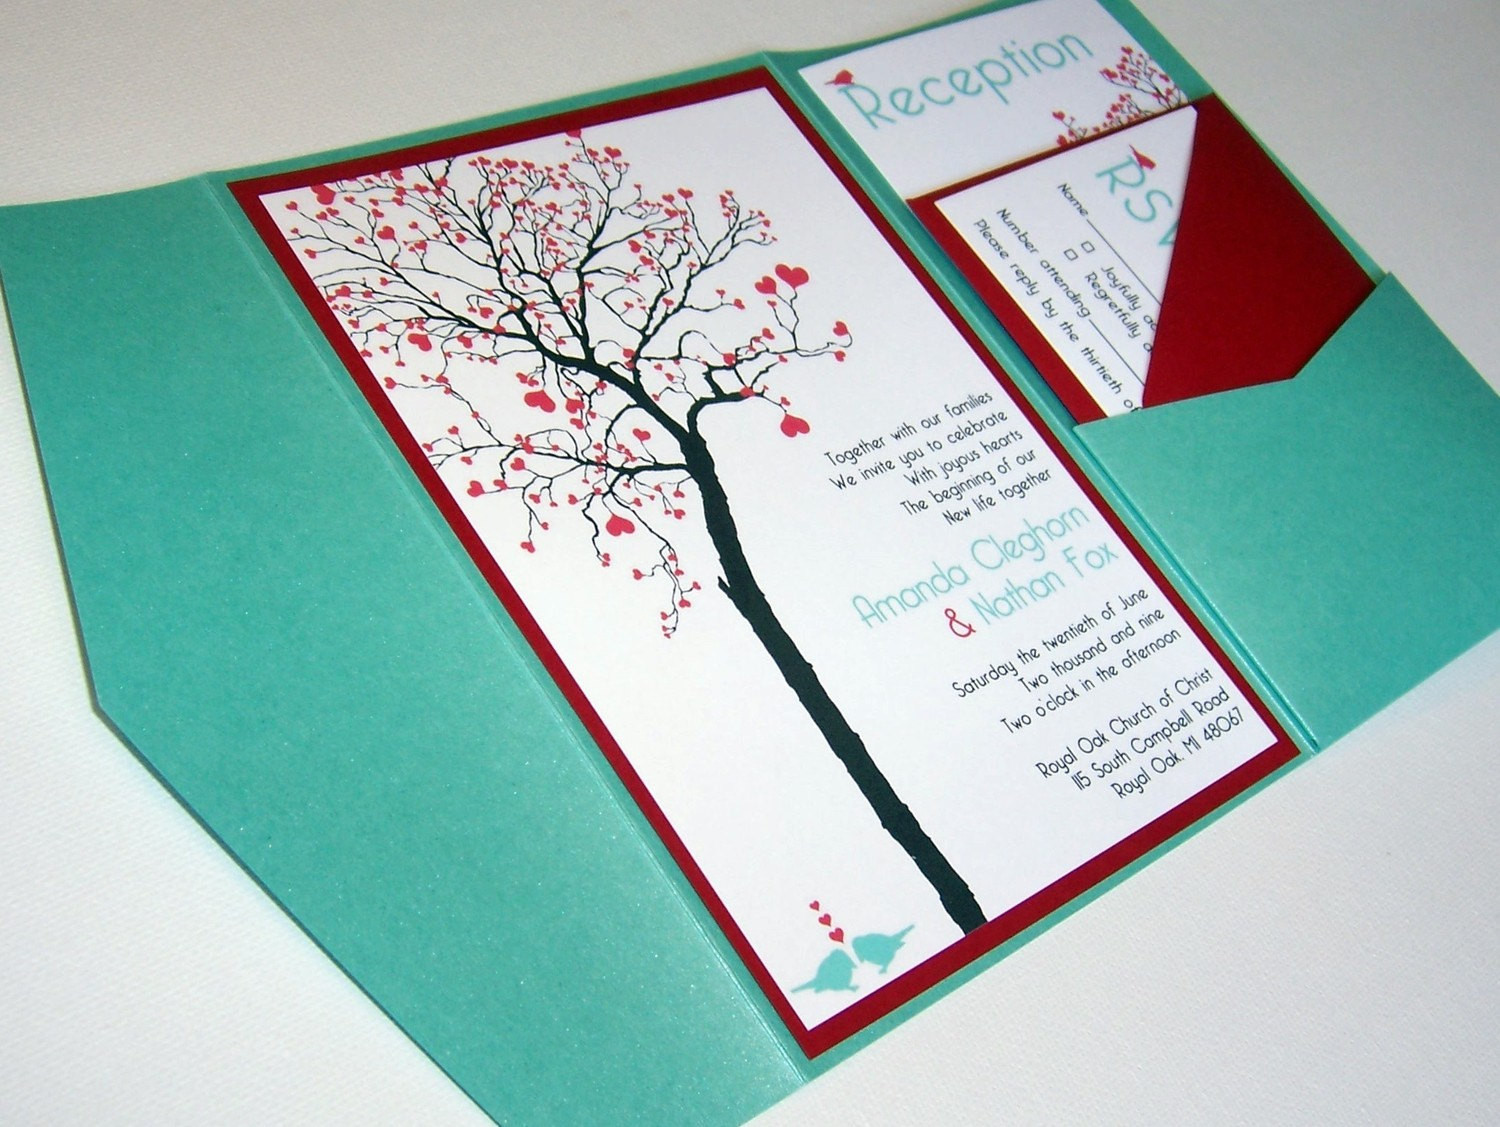 Best ideas about Wedding Invite DIY
. Save or Pin Wedding Invitation DIY Pocketfold Heart Tree Printable Now.